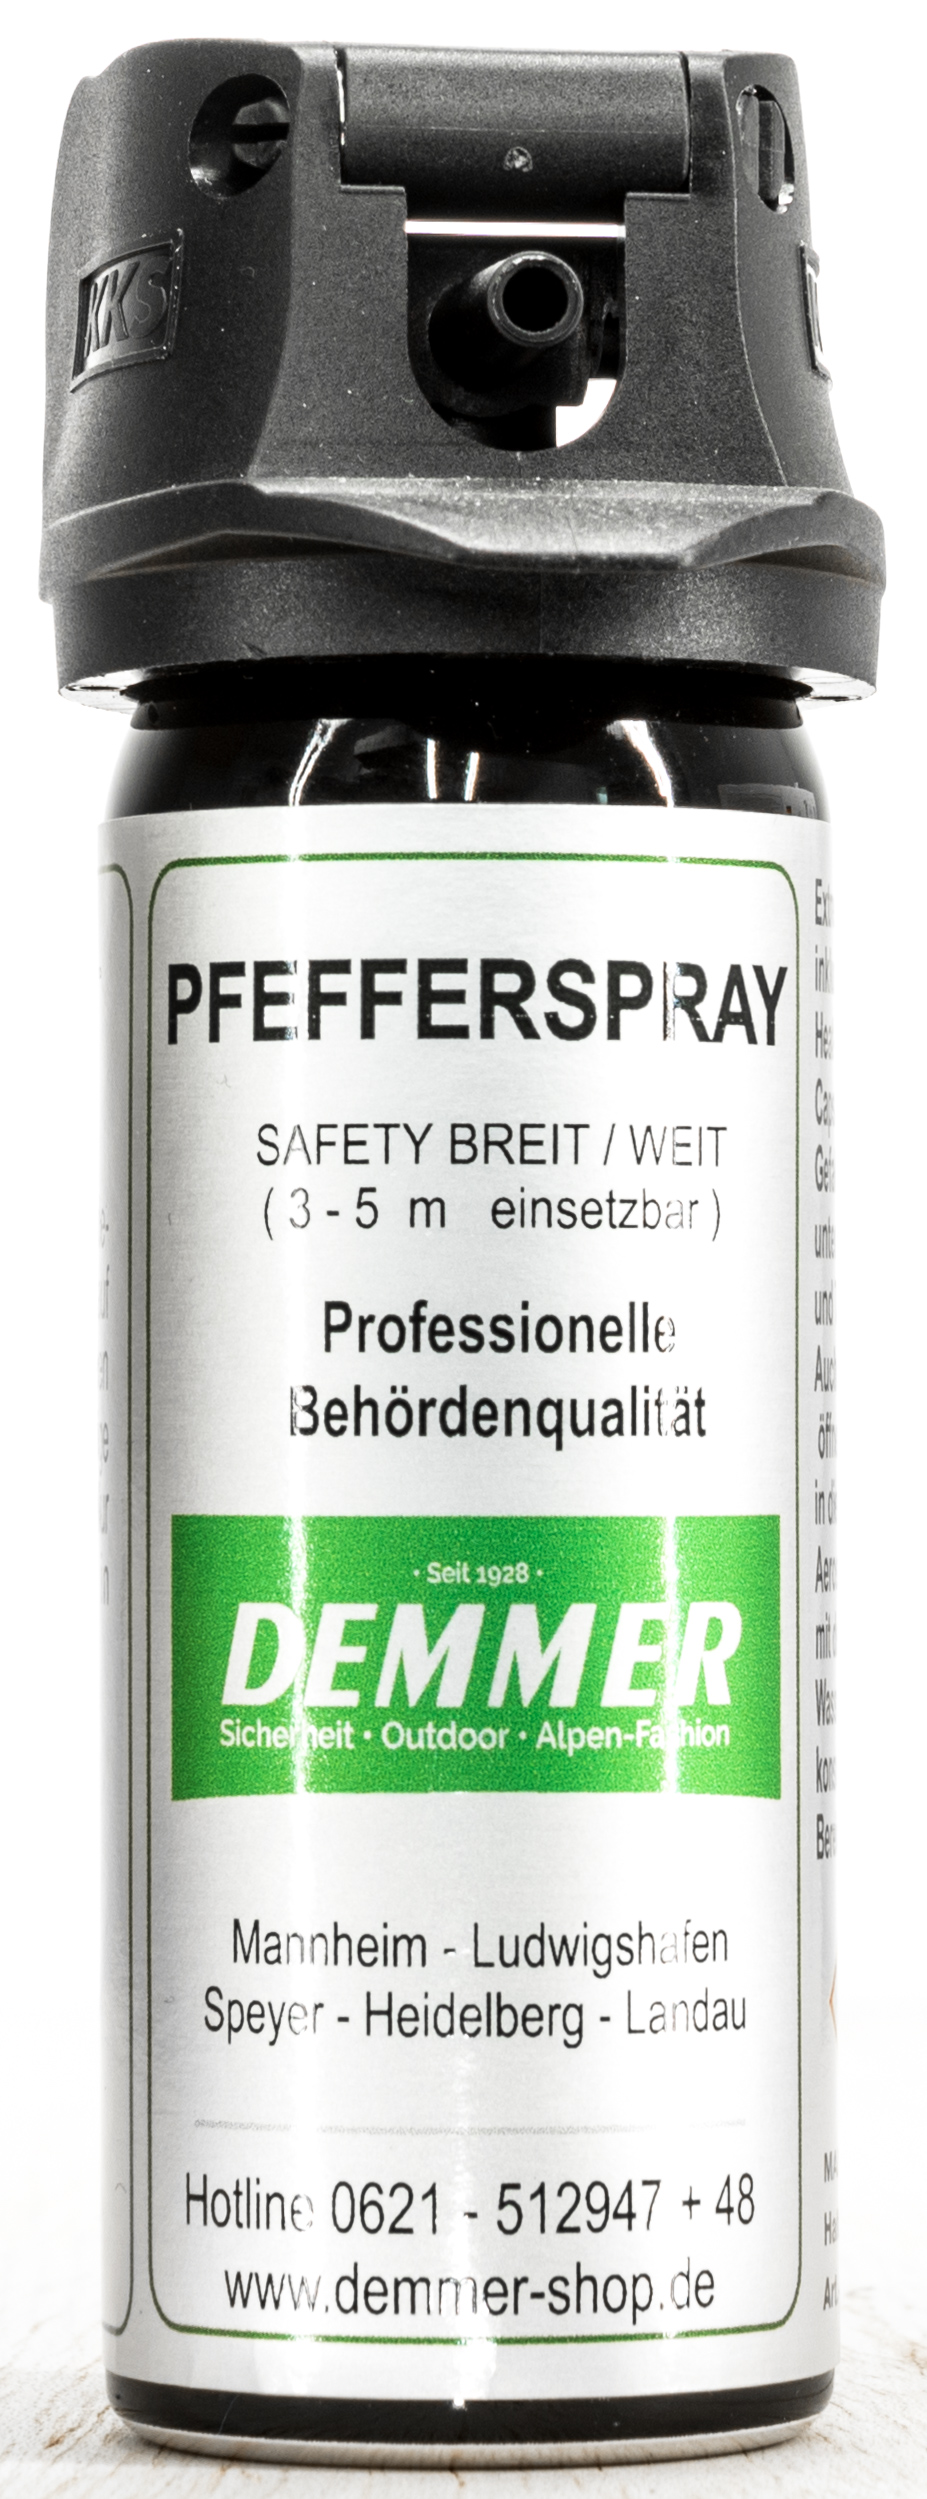 Pfefferspray Police RSG Profi-Abwehrspray